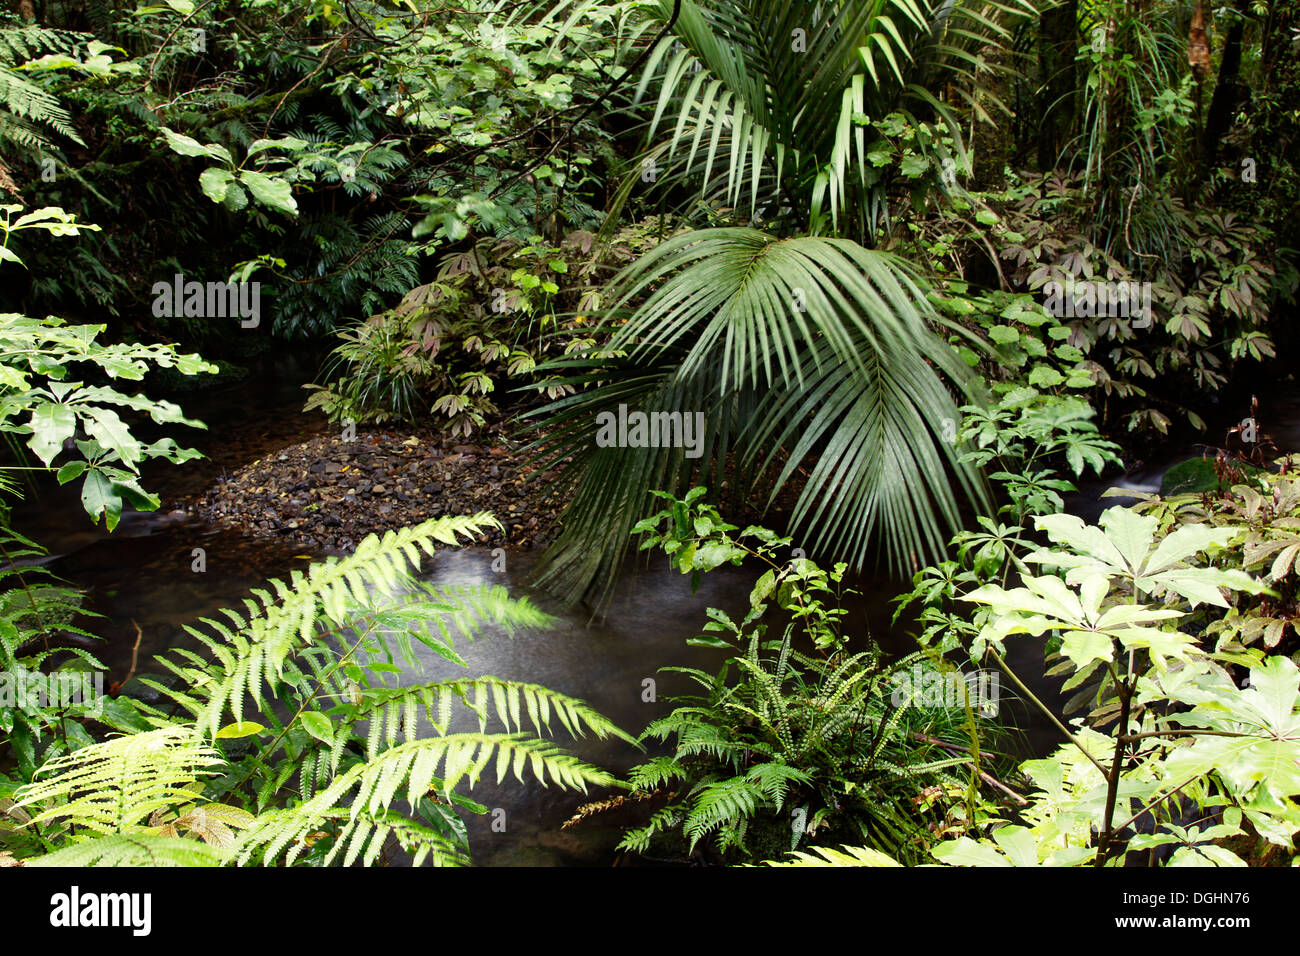 Lush foliage in tropical jungle Stock Photo